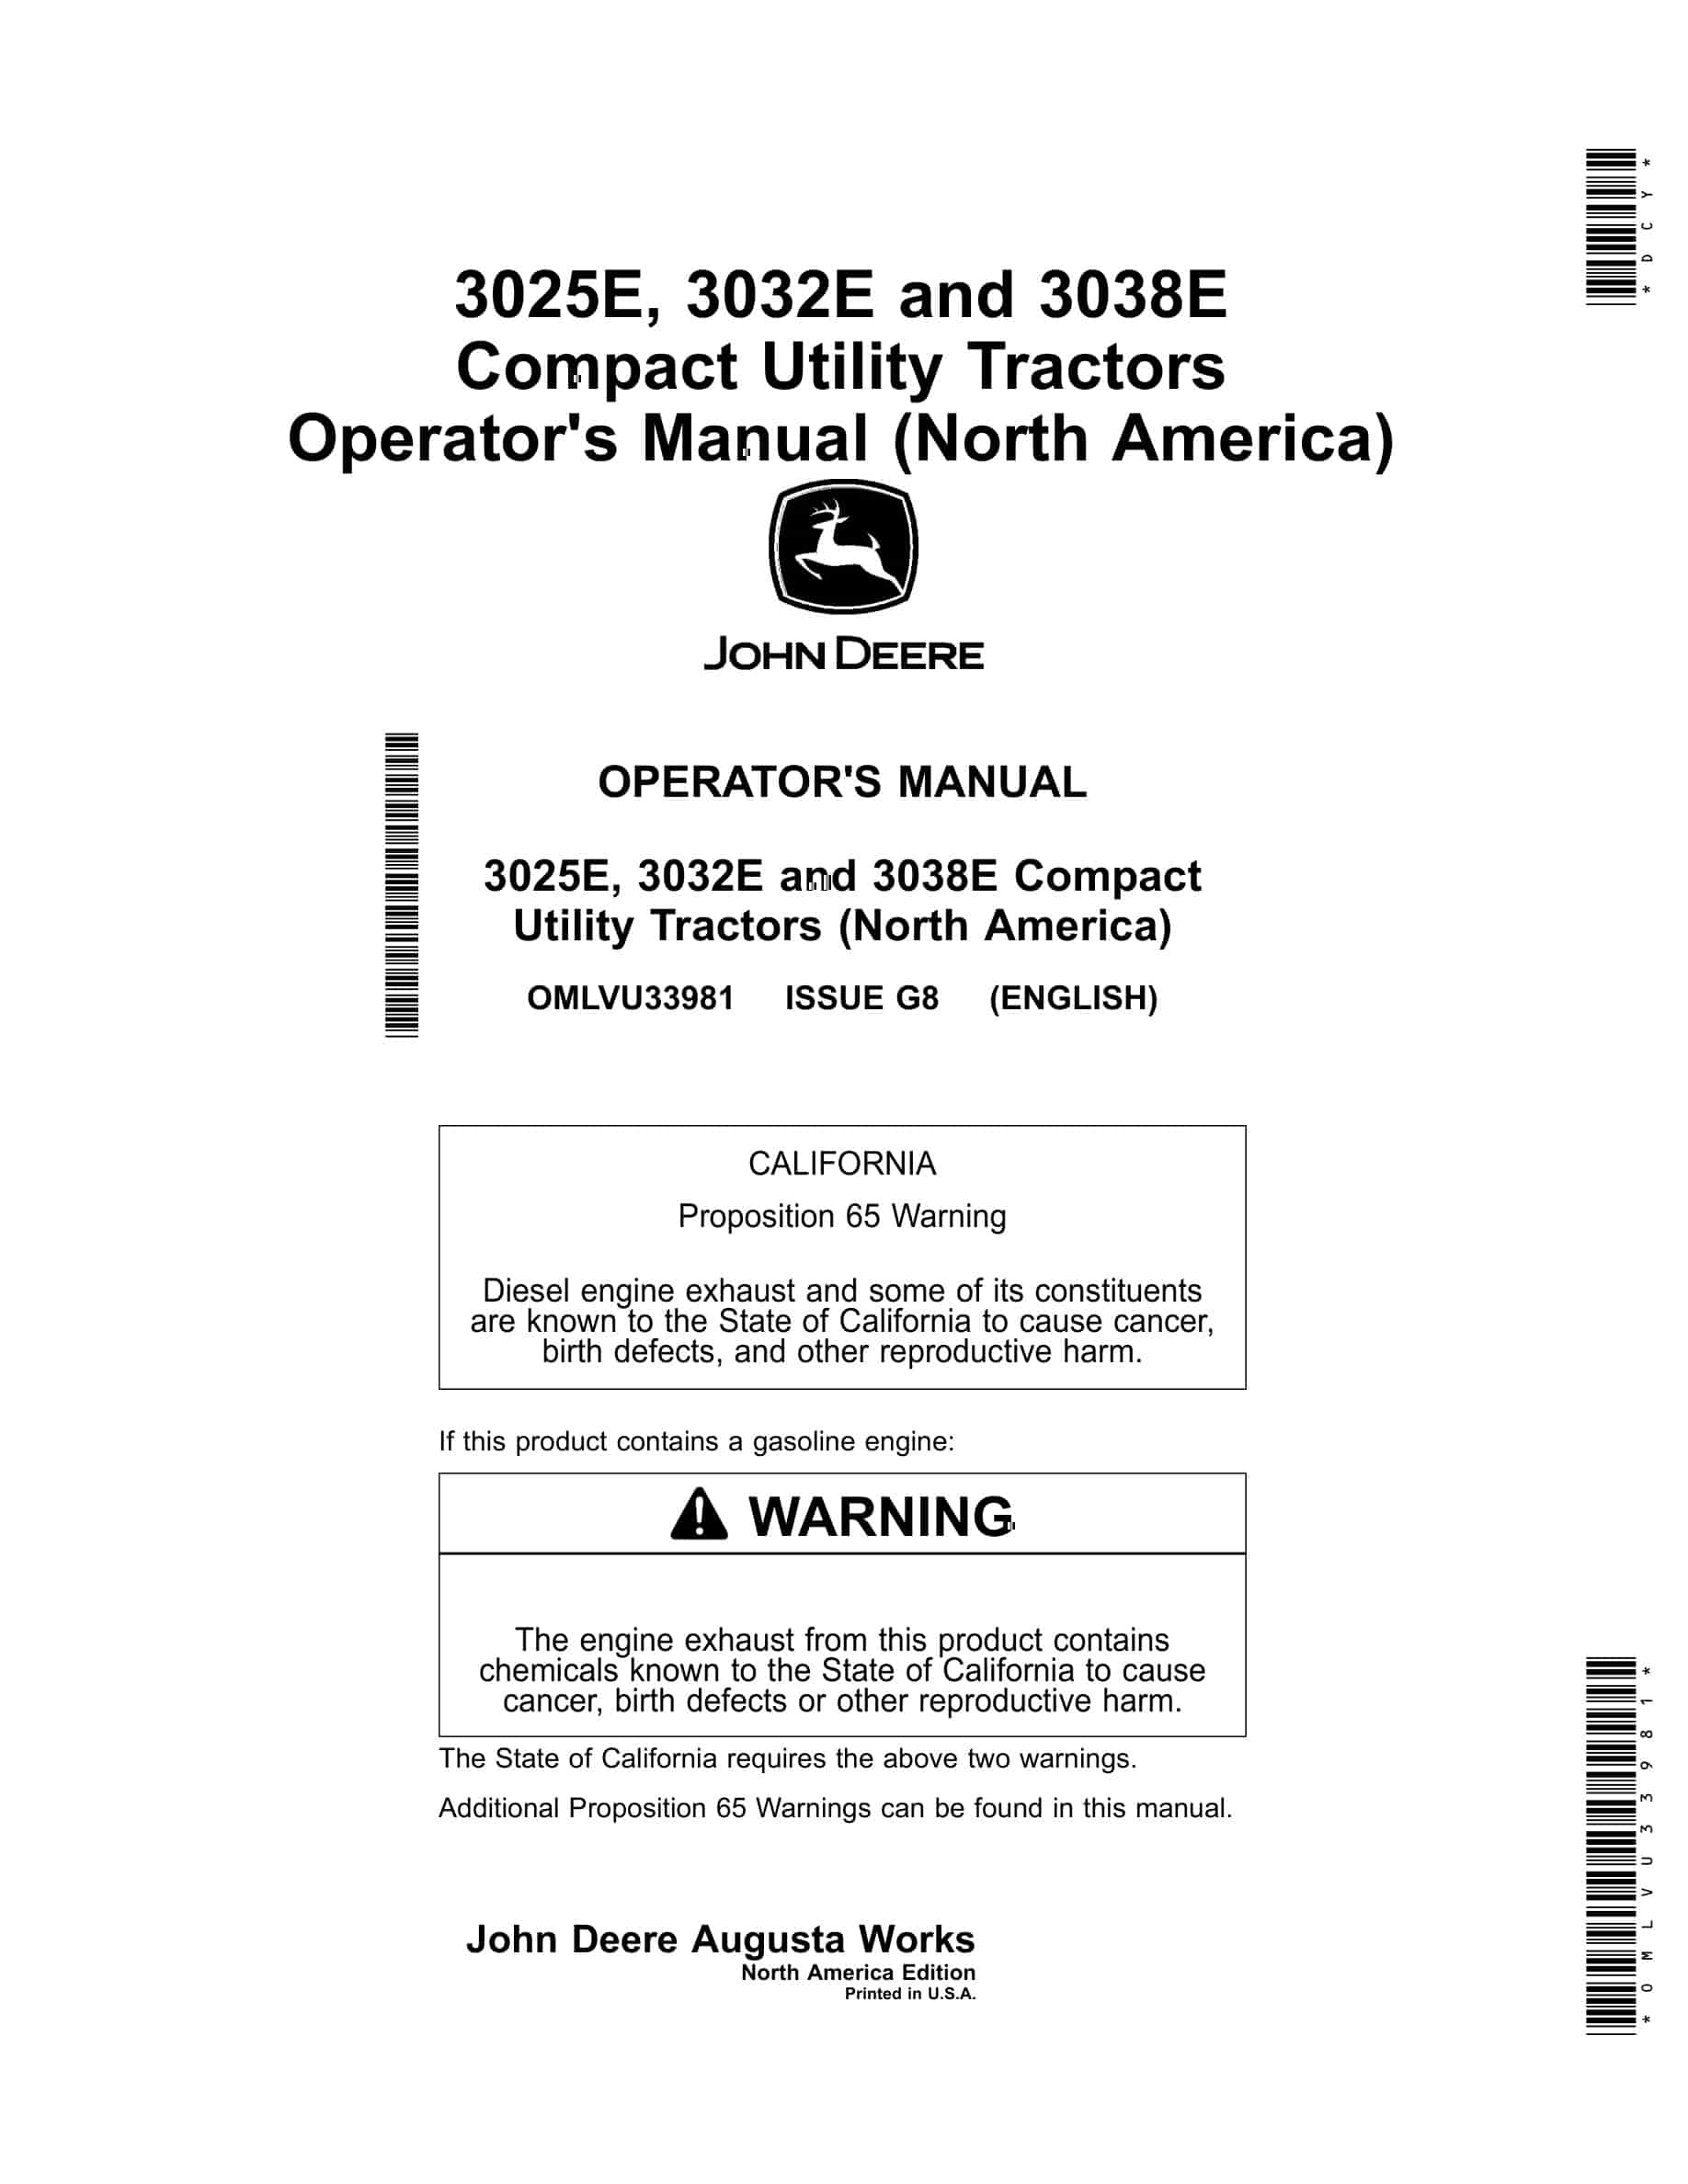 John Deere 3025E, 3032E and 3038E Tractor Operator Manual OMLVU33981-1